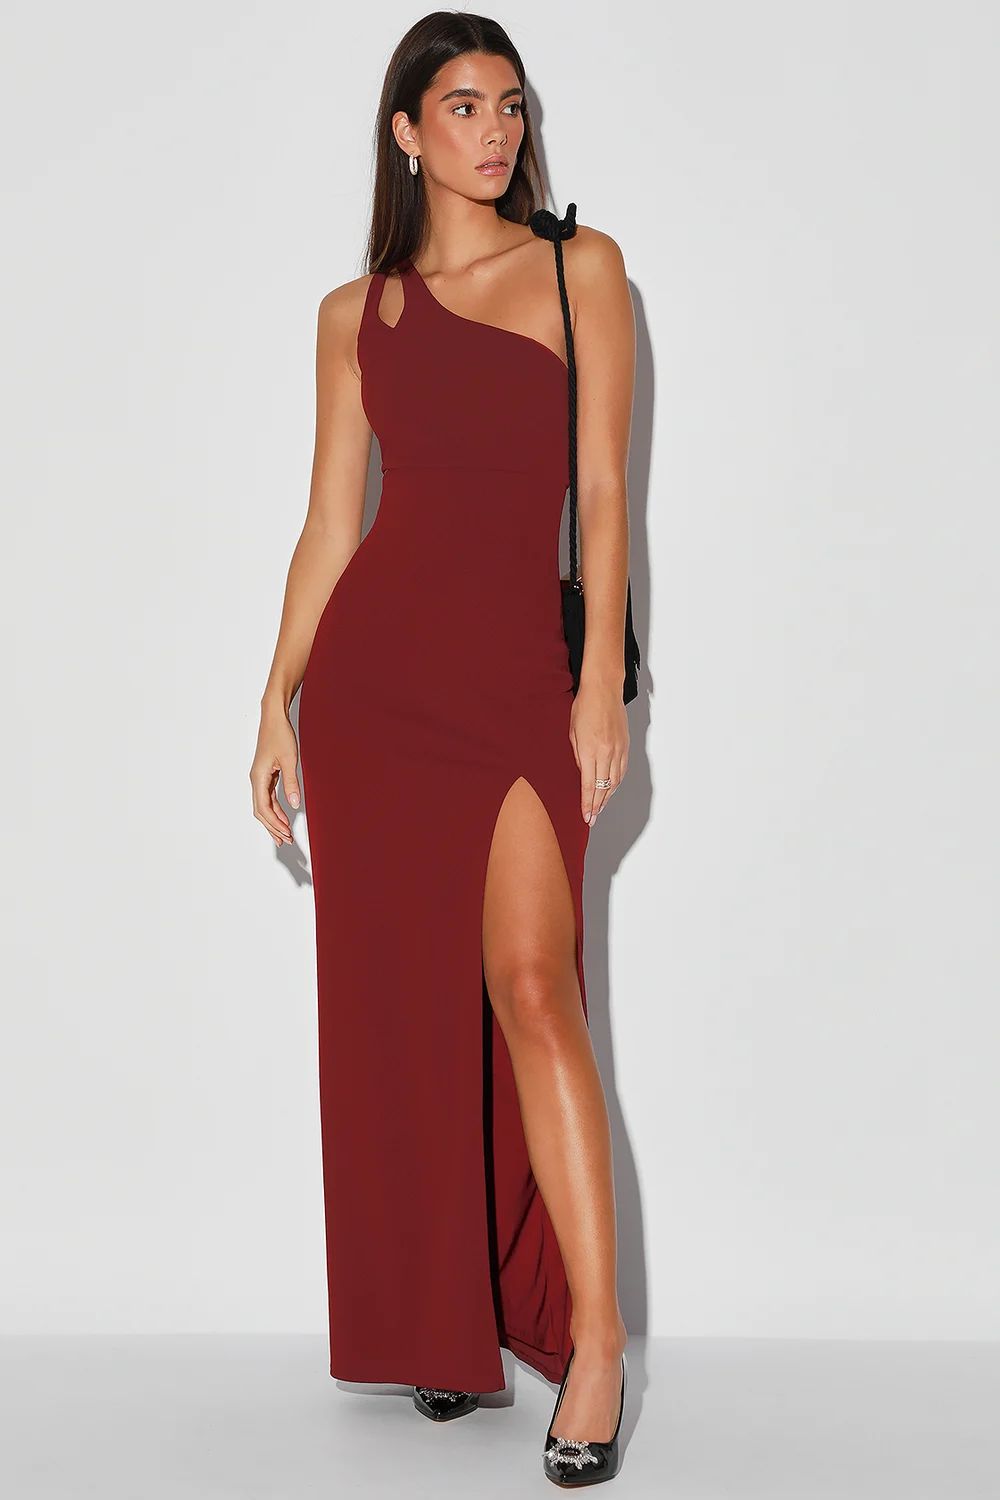 Simply Beautiful Burgundy One-Shoulder Cutout Maxi Dress | Lulus (US)